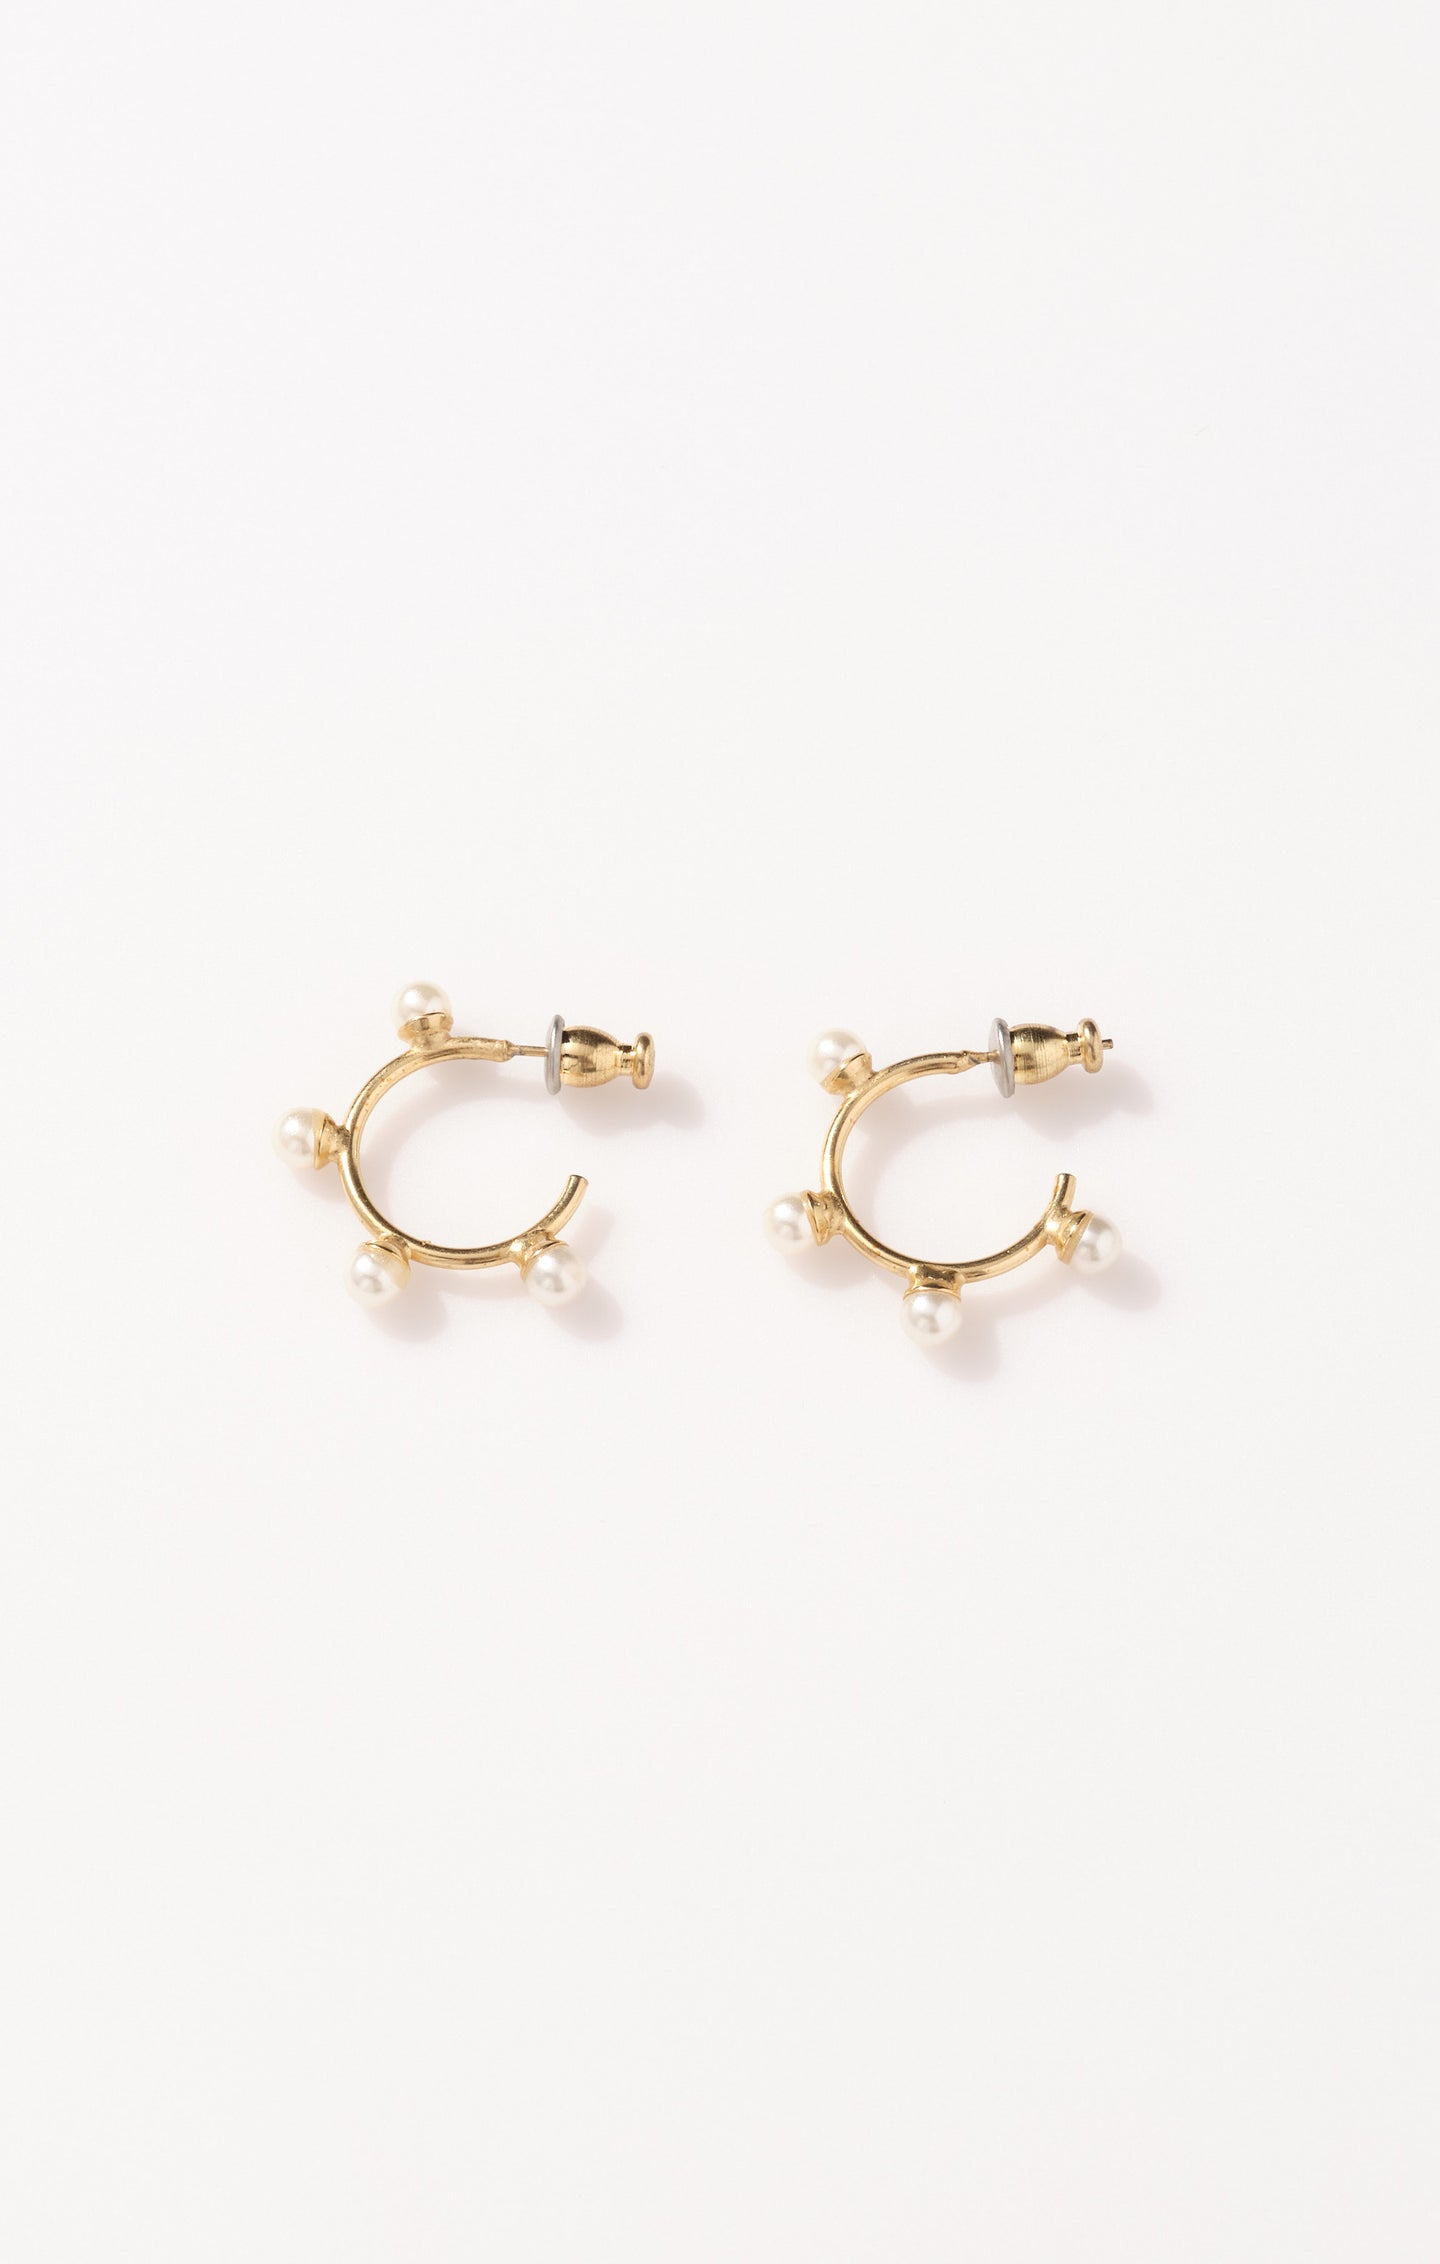 Tiny Gold Hoop Earrings